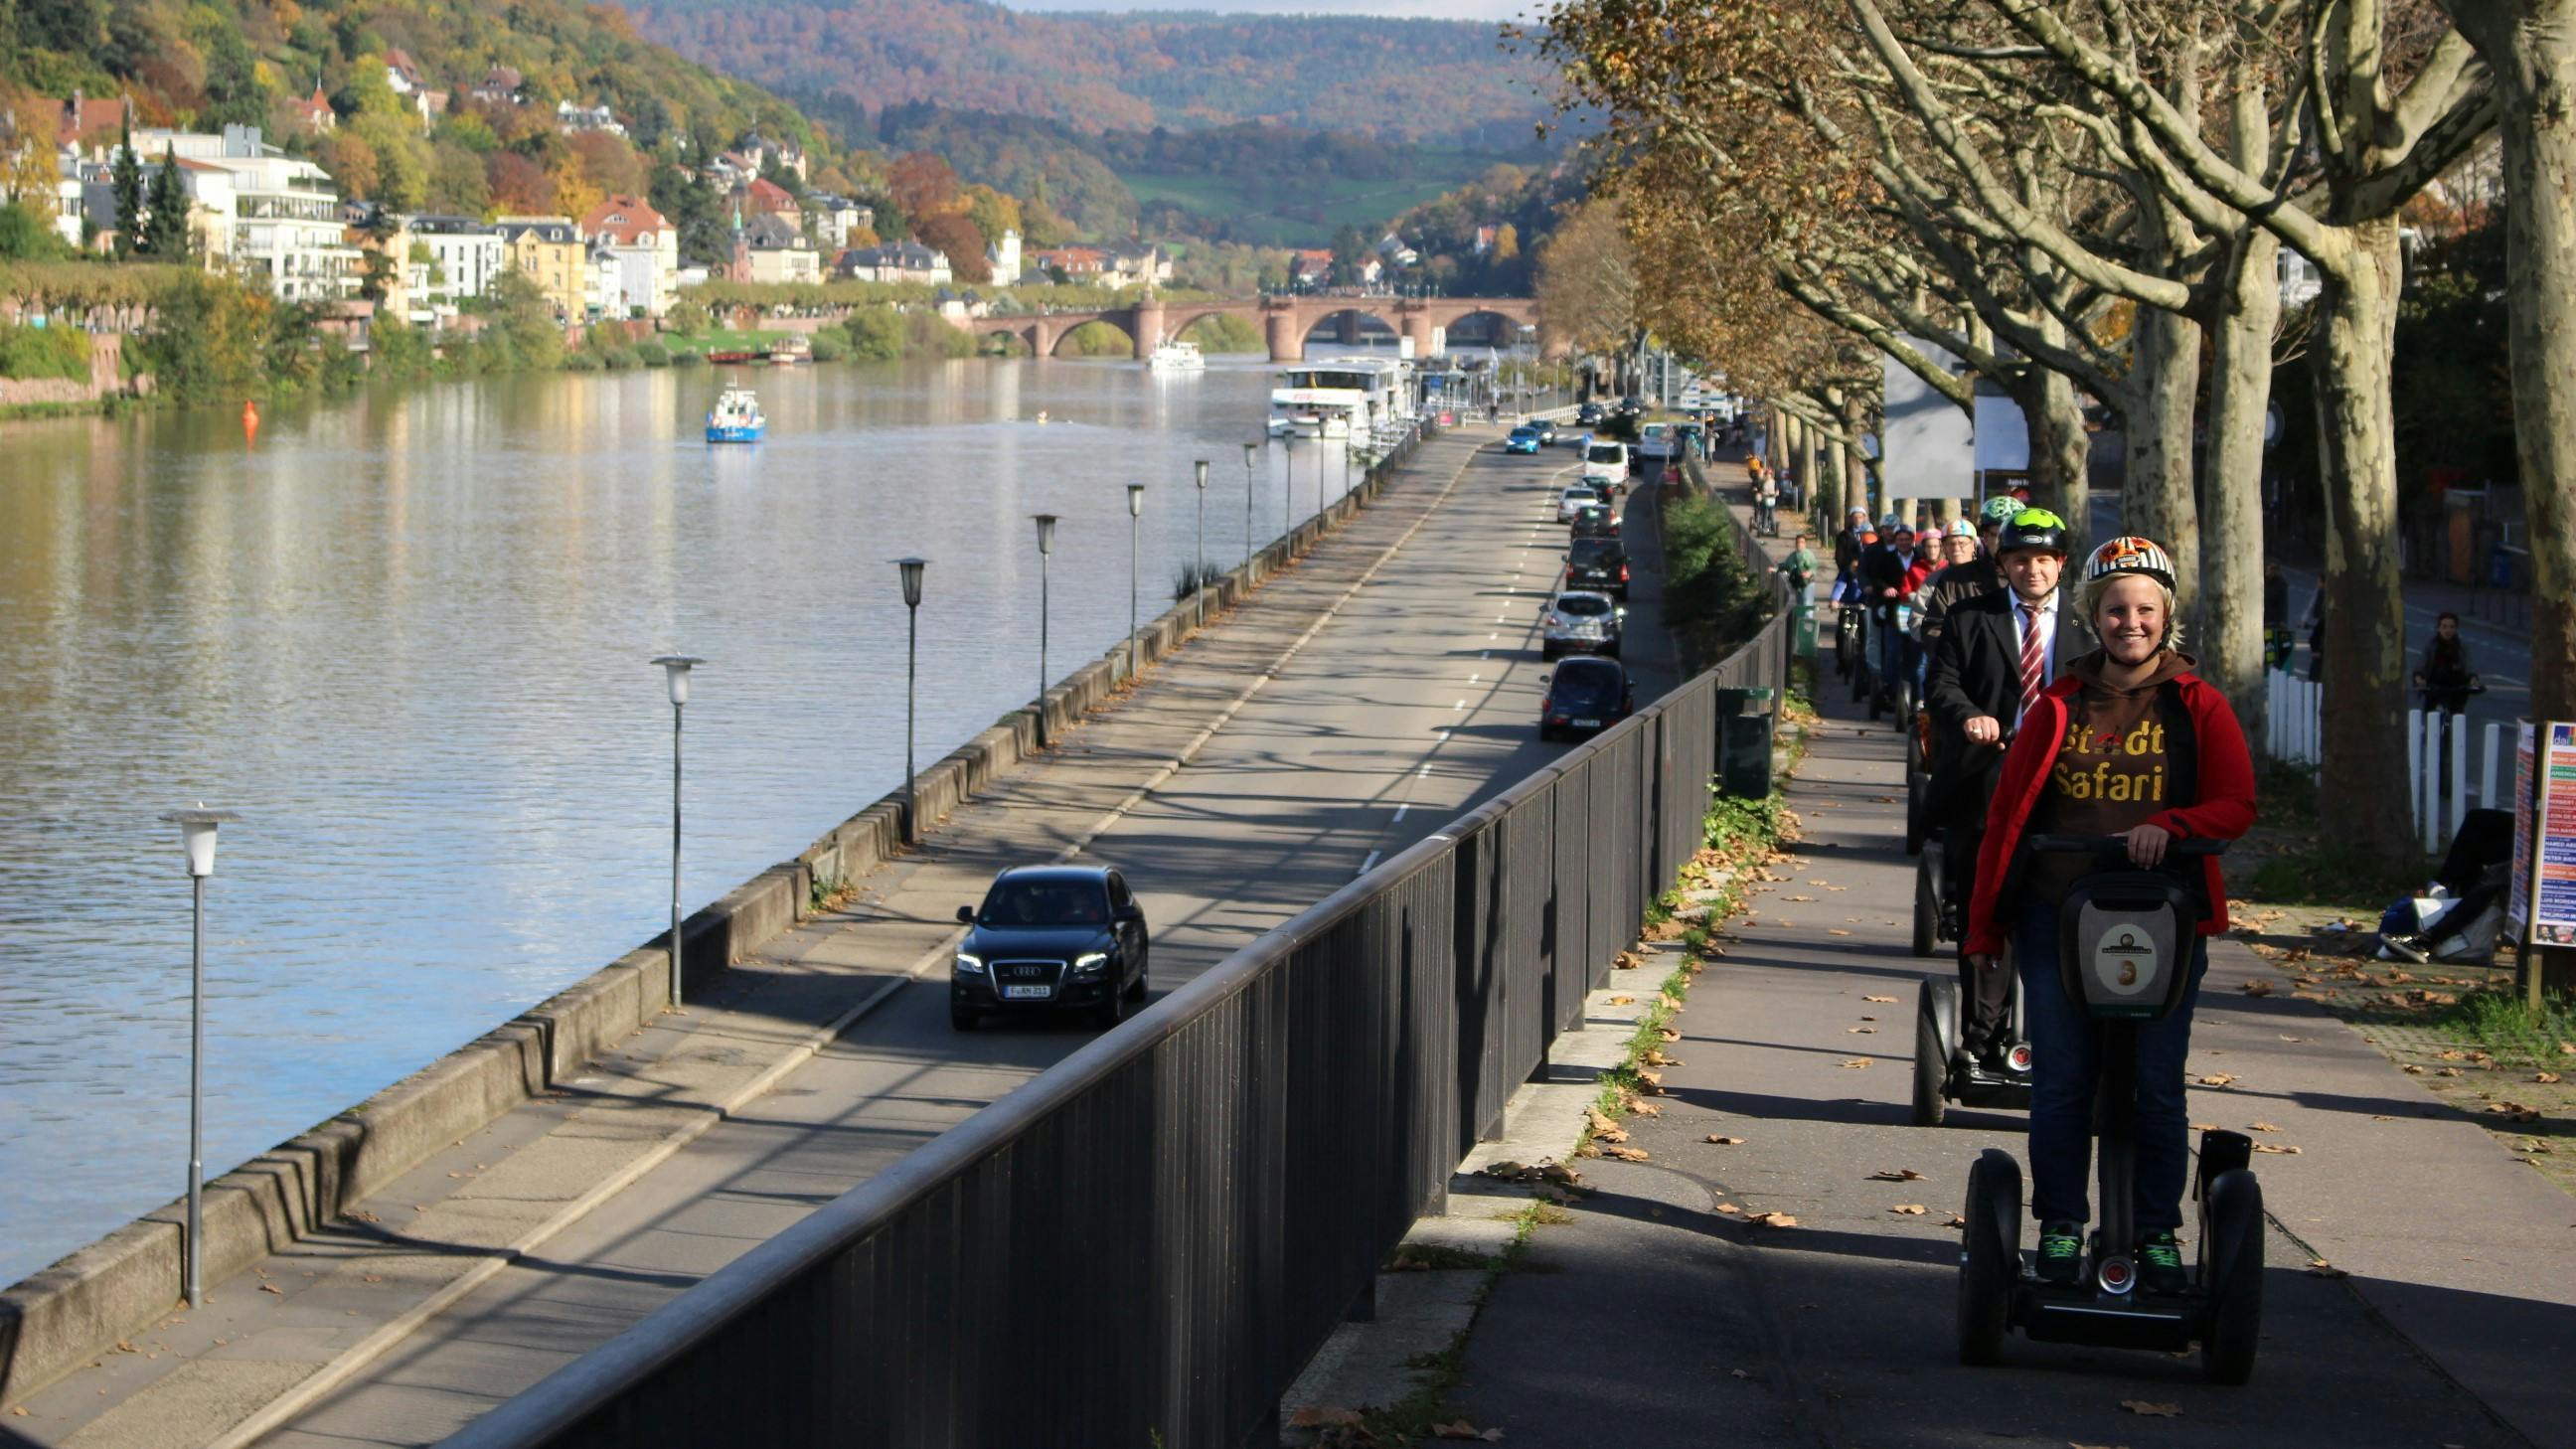 Tour en scooter autoequilibrado de Mannheim a lo largo del río Neckar